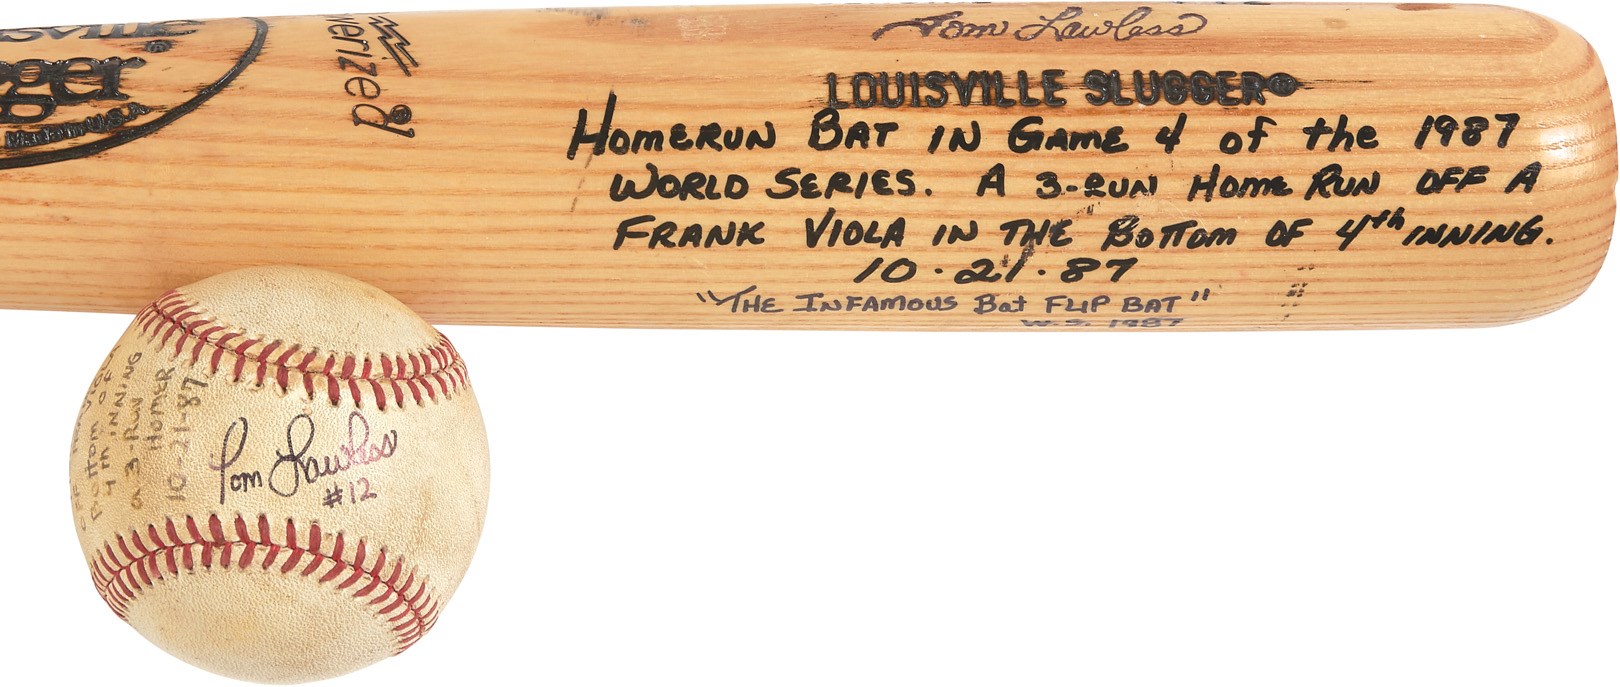 St. Louis Cardinals - 1987 World Series Tom Lawless Game Used "Bat Flip" Home Run Bat & Ball (Photo-Matched, Lawless LOA)